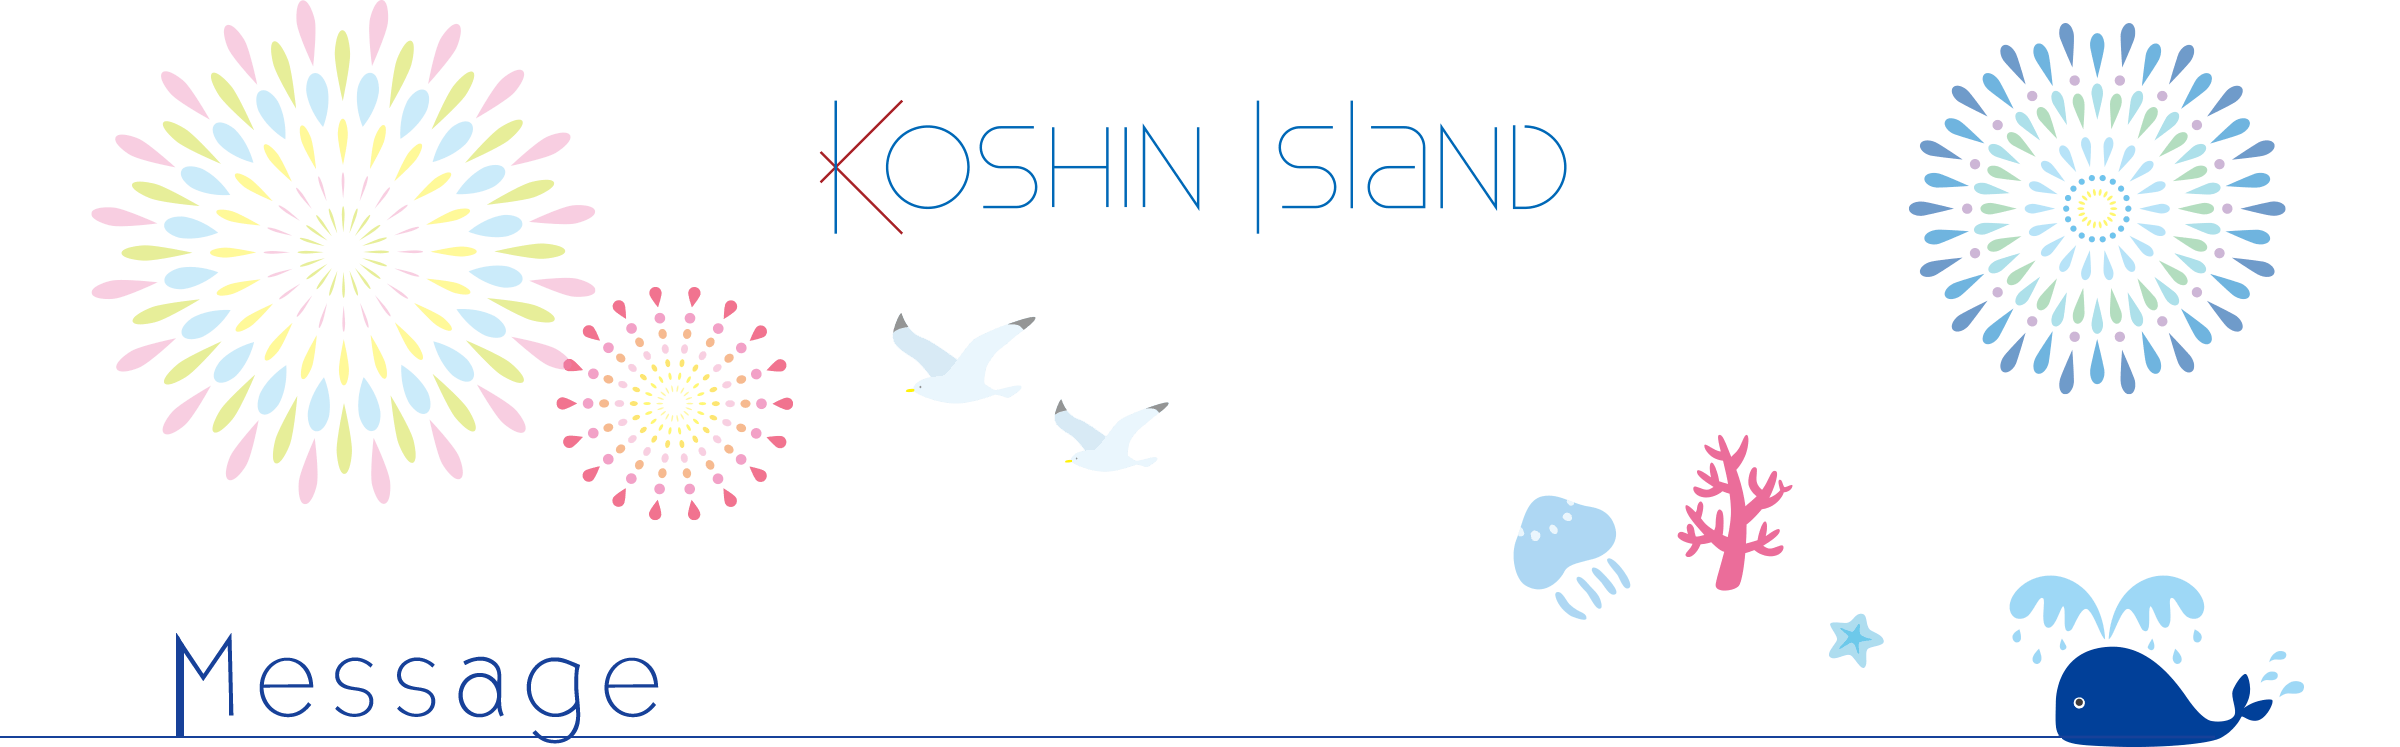 free talk | koshin island